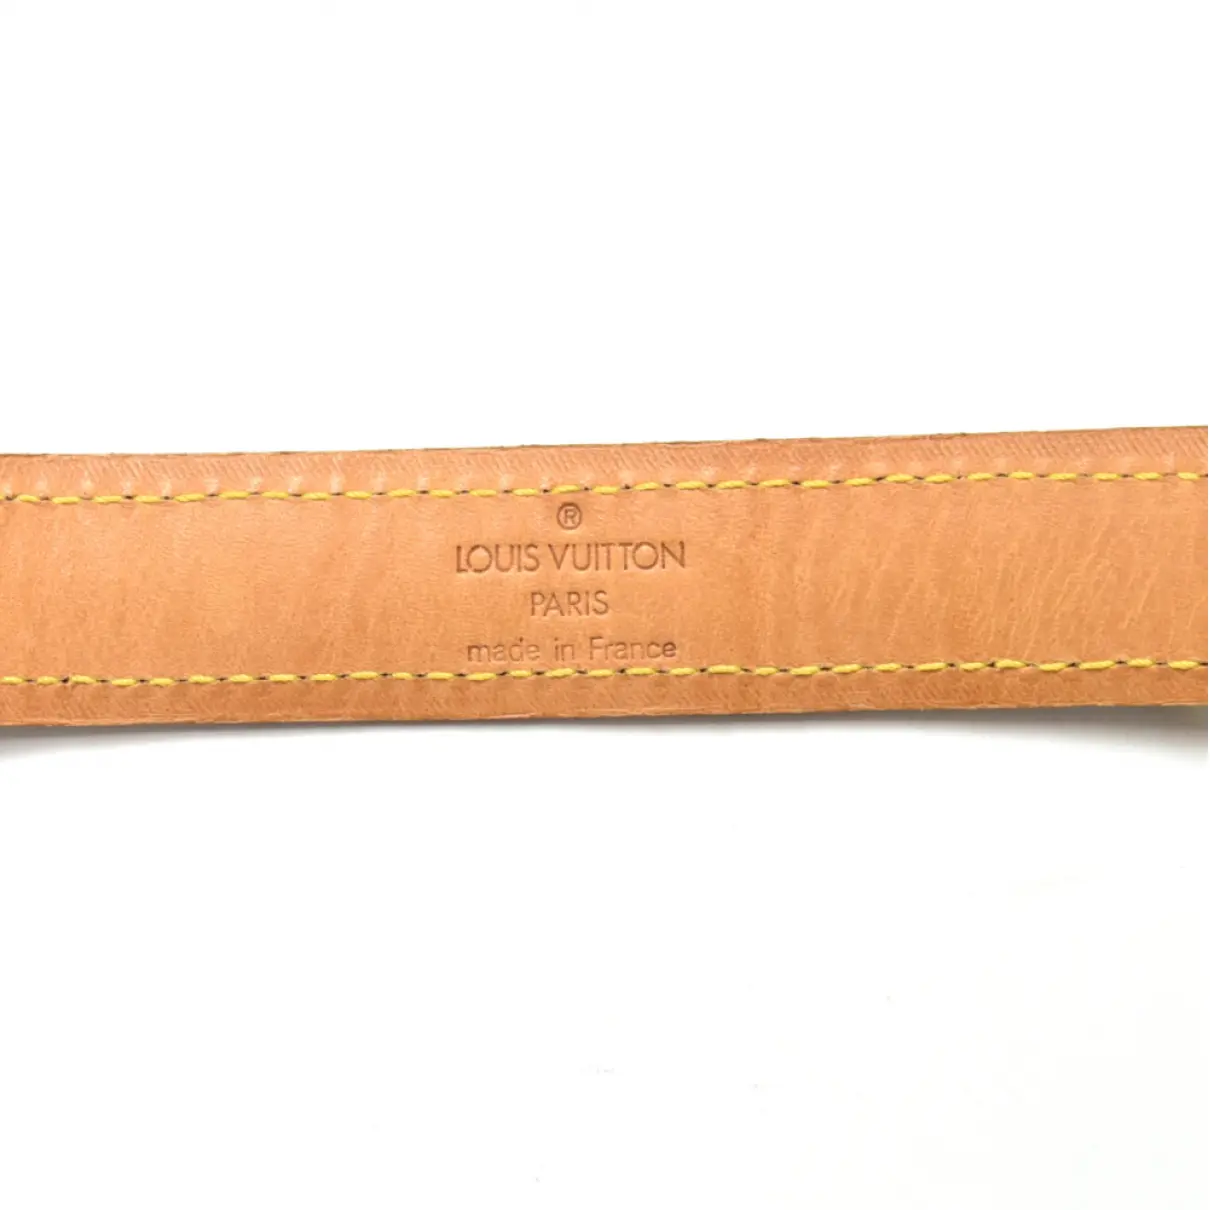 Collier Baxter collar Louis Vuitton - Vintage